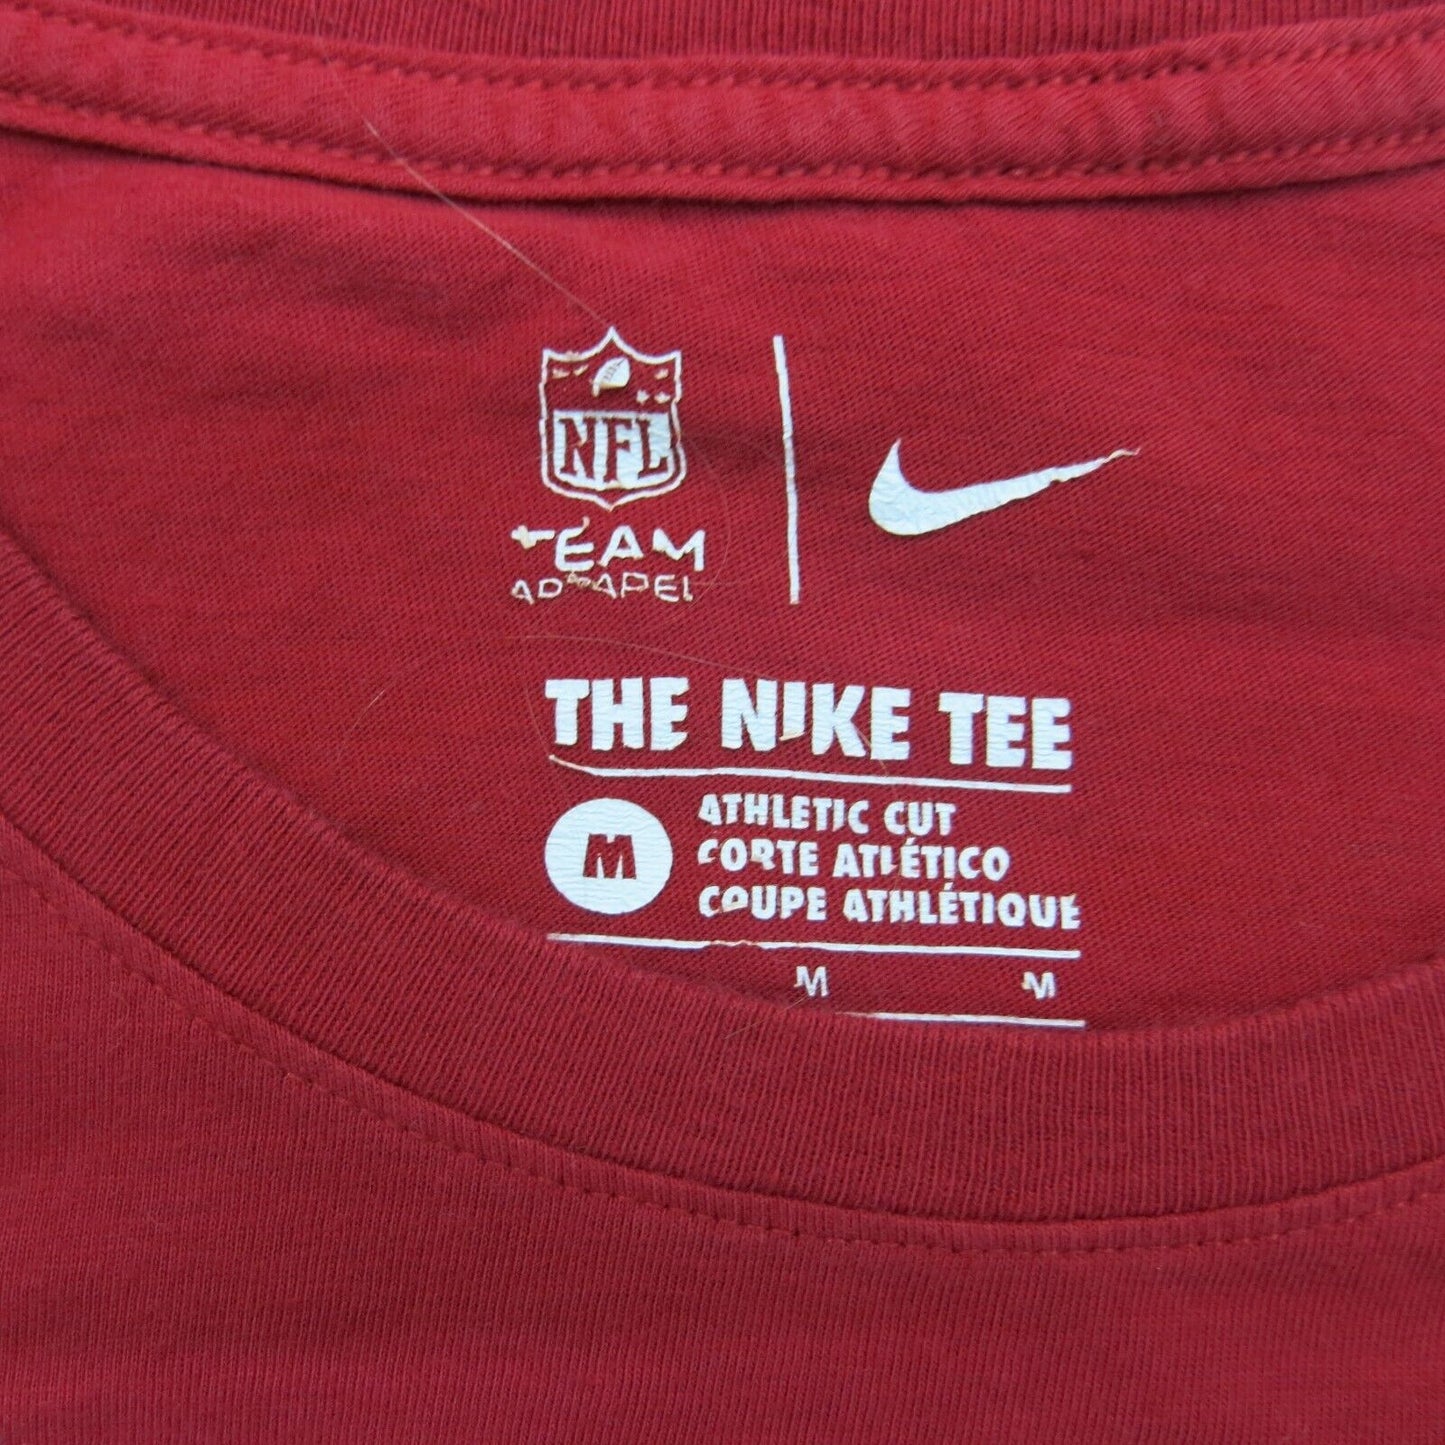 The Nike Tee NFL Team Apparel Mens Crew Neck T Shirt Dri Fit Athletic Cut Red M